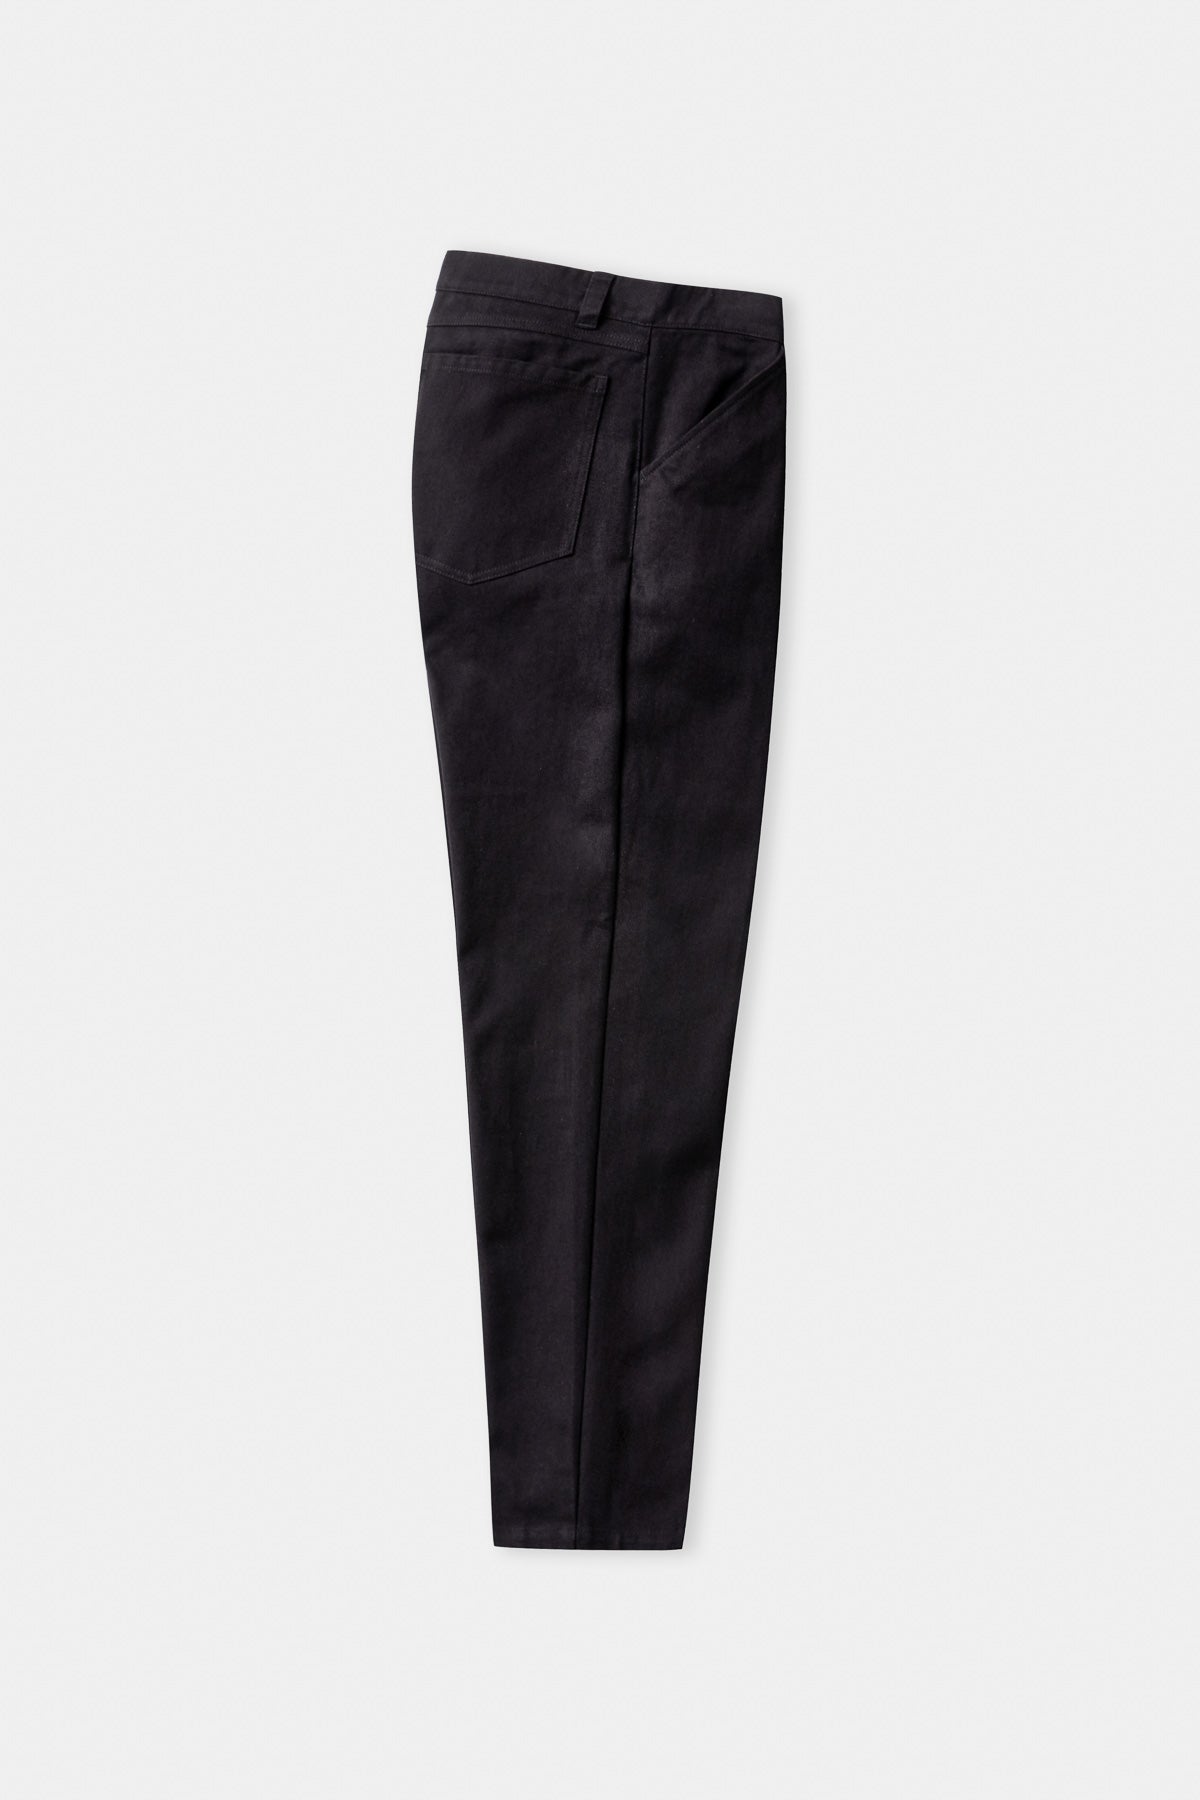 OLF trousers eco black denim 400g